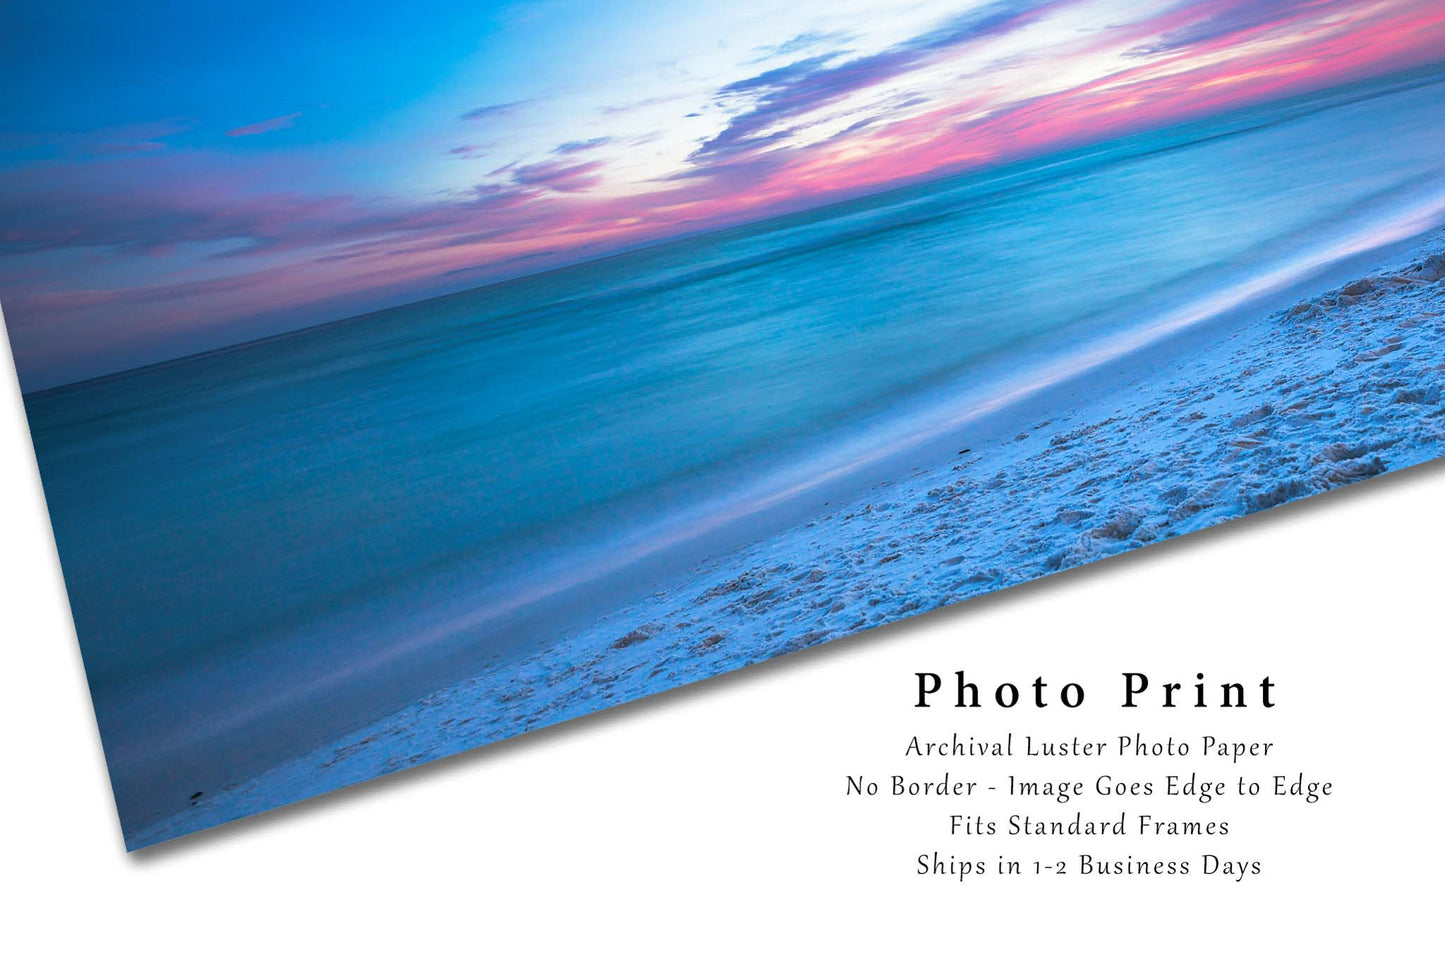 Coastal Photography Print (Not Framed) Picture of Scenic Sunset over Beach along Emerald Coast near Destin Florida Seascape Wall Art Gulf Coast Decor